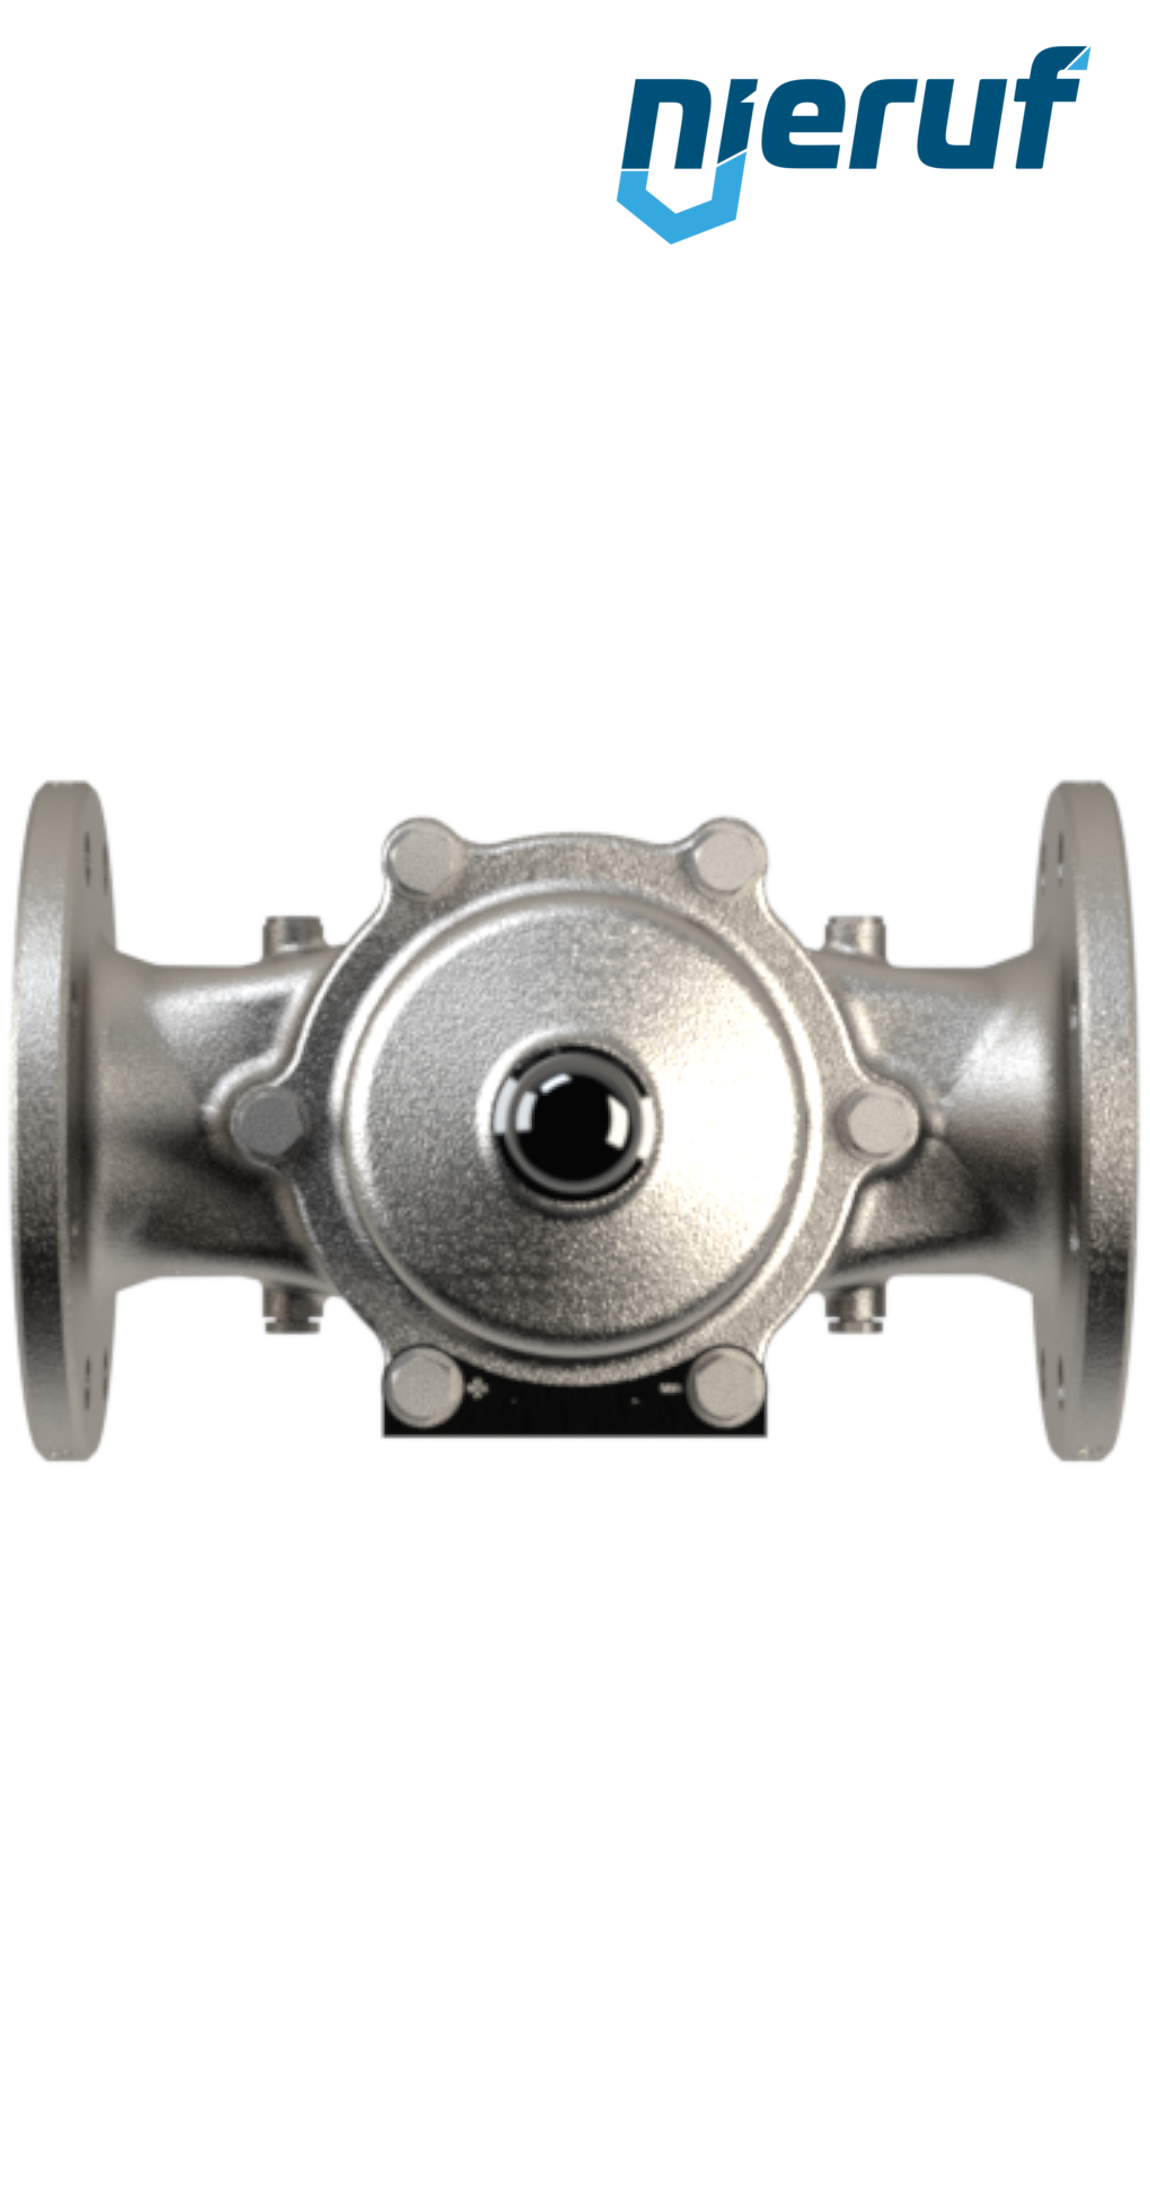 Flange-pressure reducing valve DN 100 PN16 DM08 stainless steel FKM 1.0 - 8.0 bar